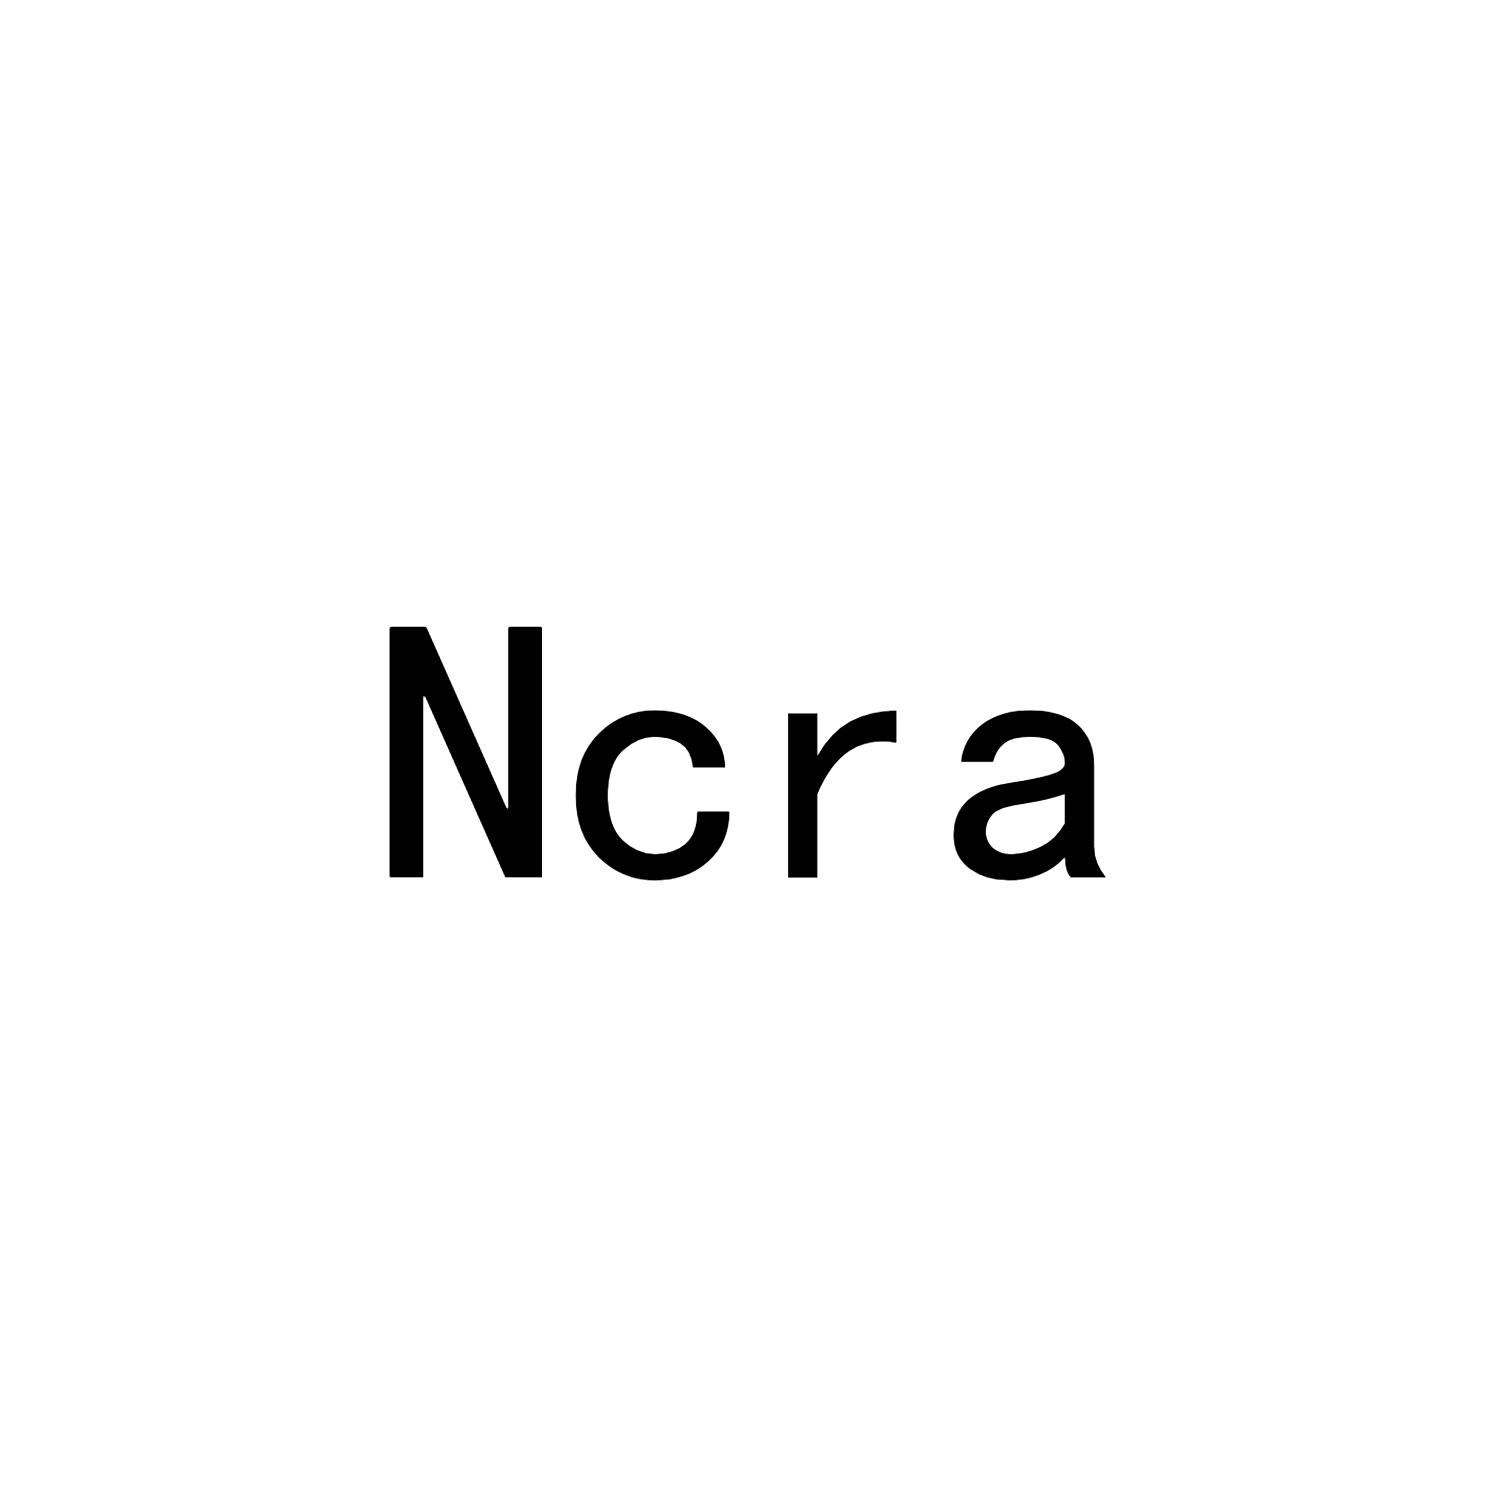 NCRA